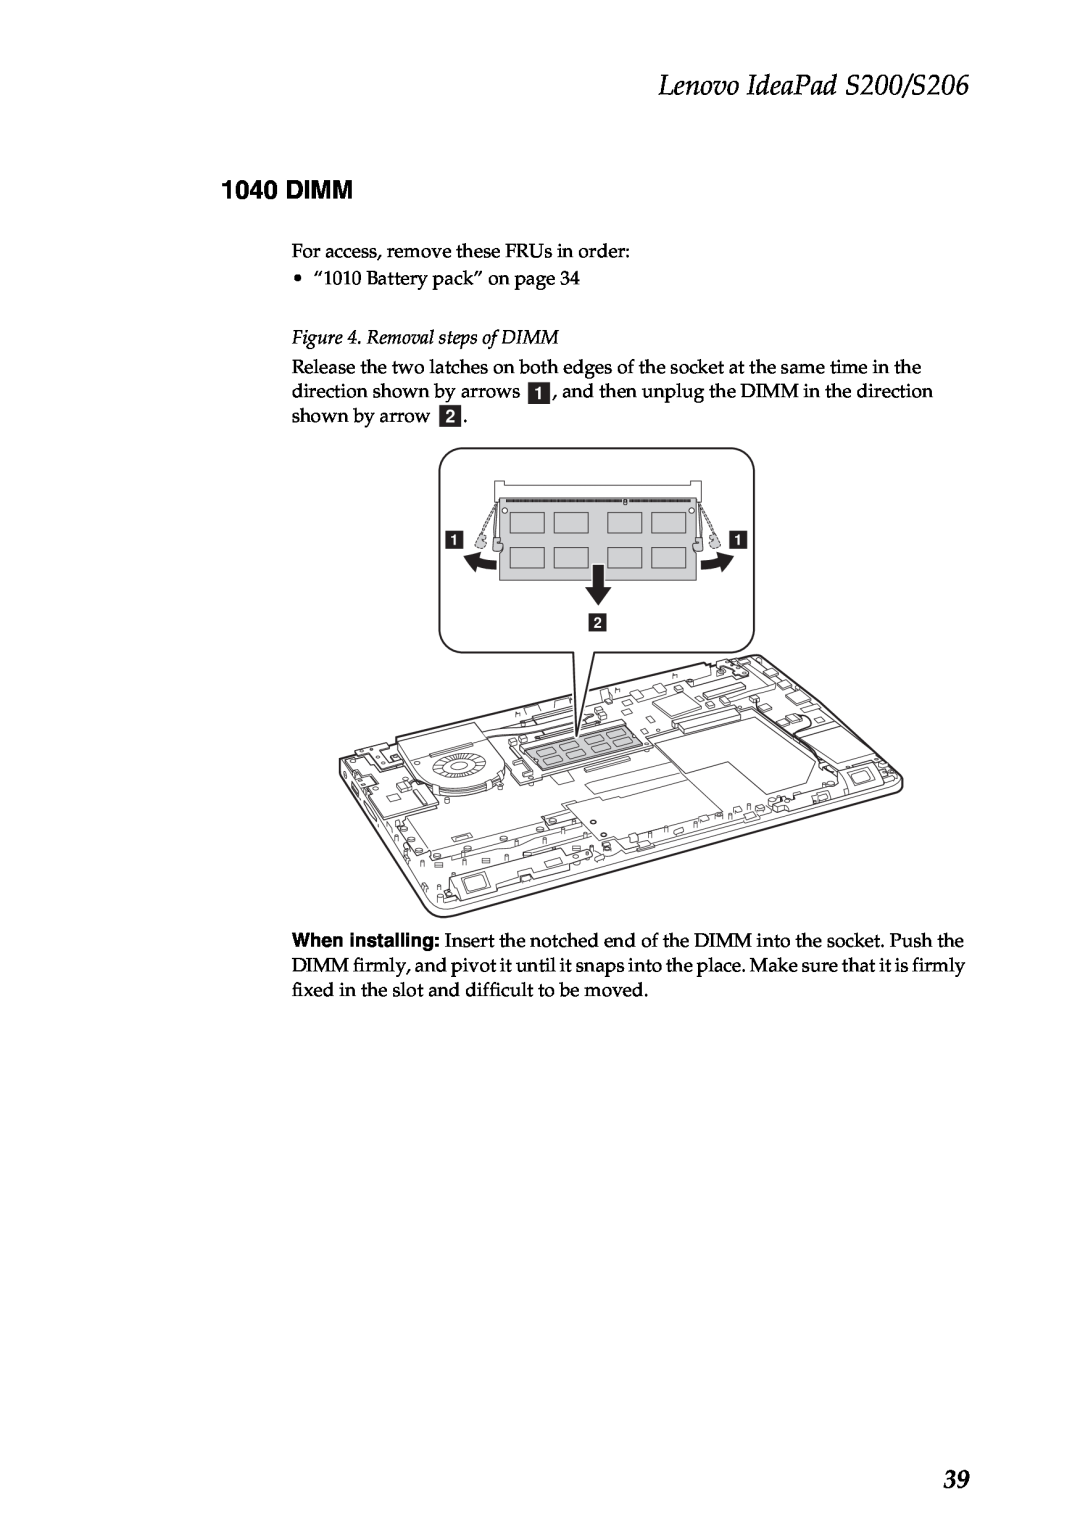 Lenovo manual Dimm, Removal steps of DIMM, Lenovo IdeaPad S200/S206 